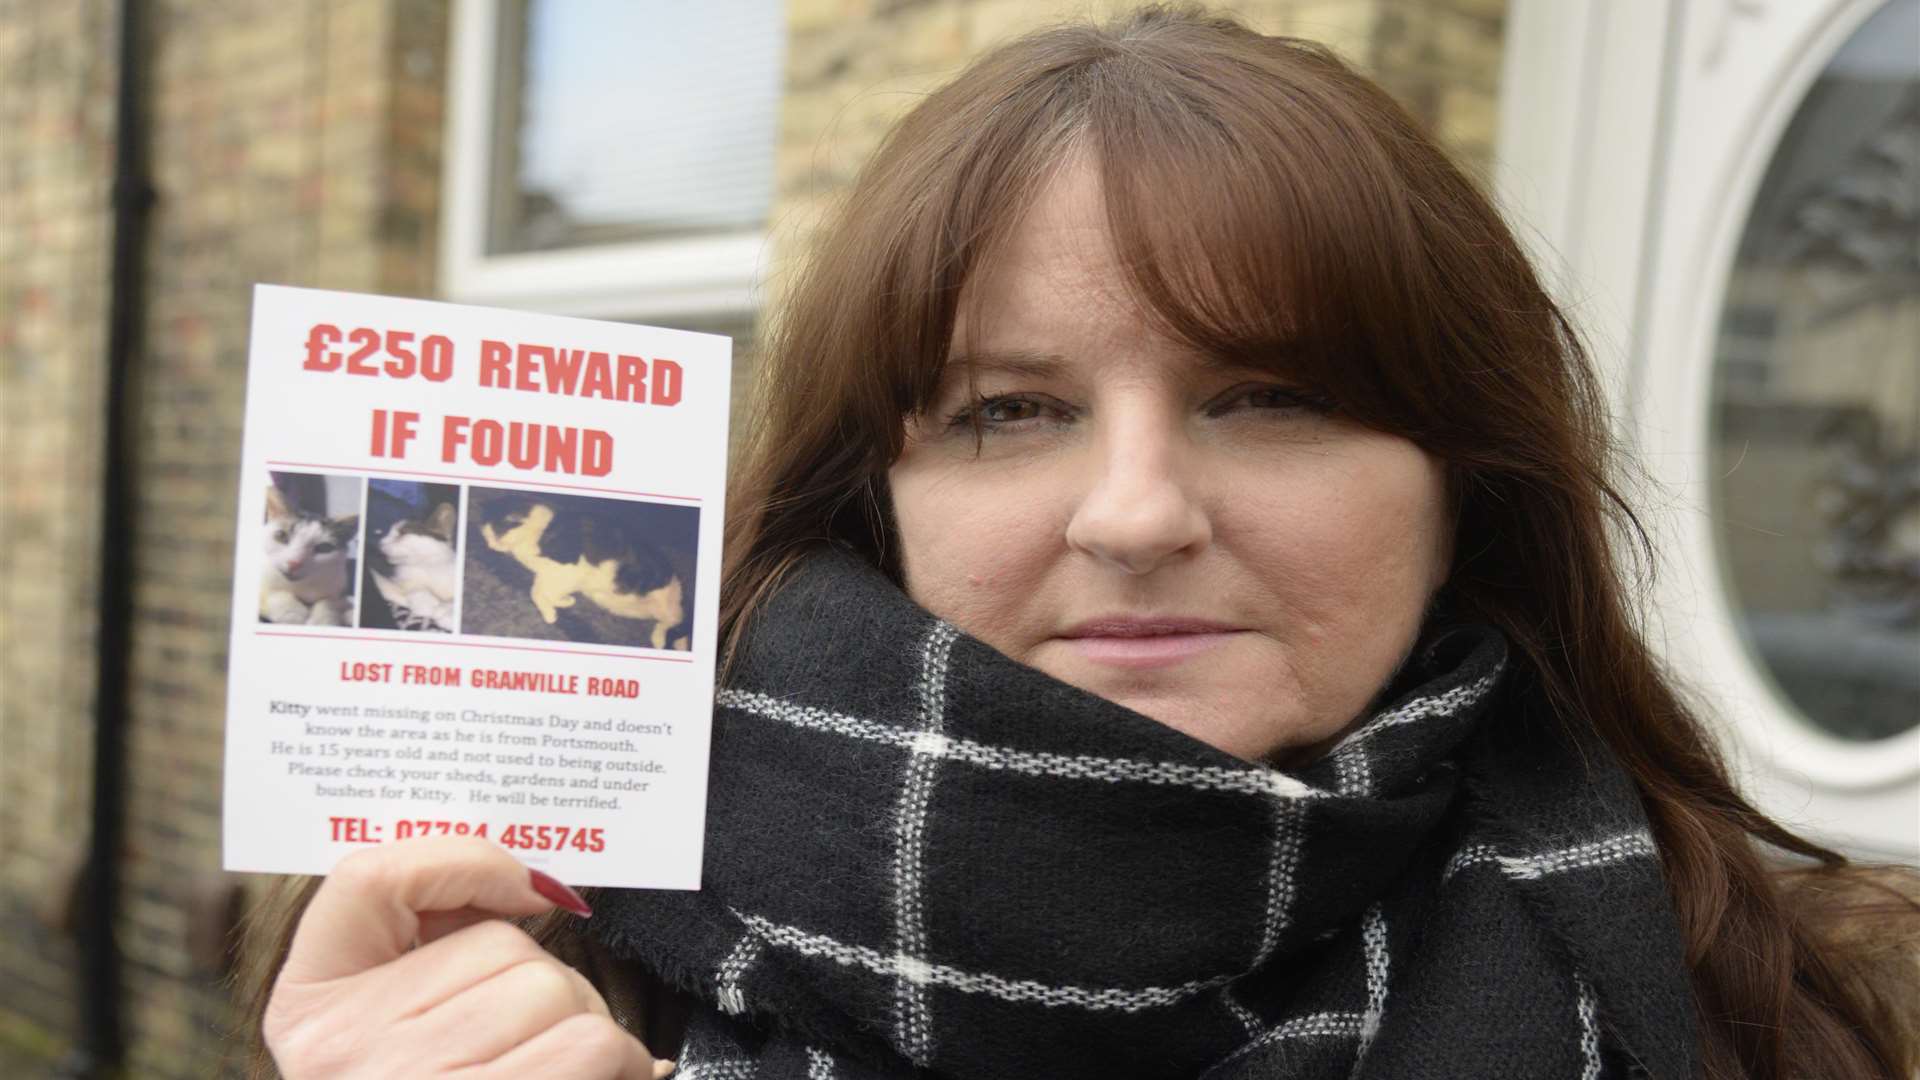 Martine Docherty has delivered 3,000 leaflets